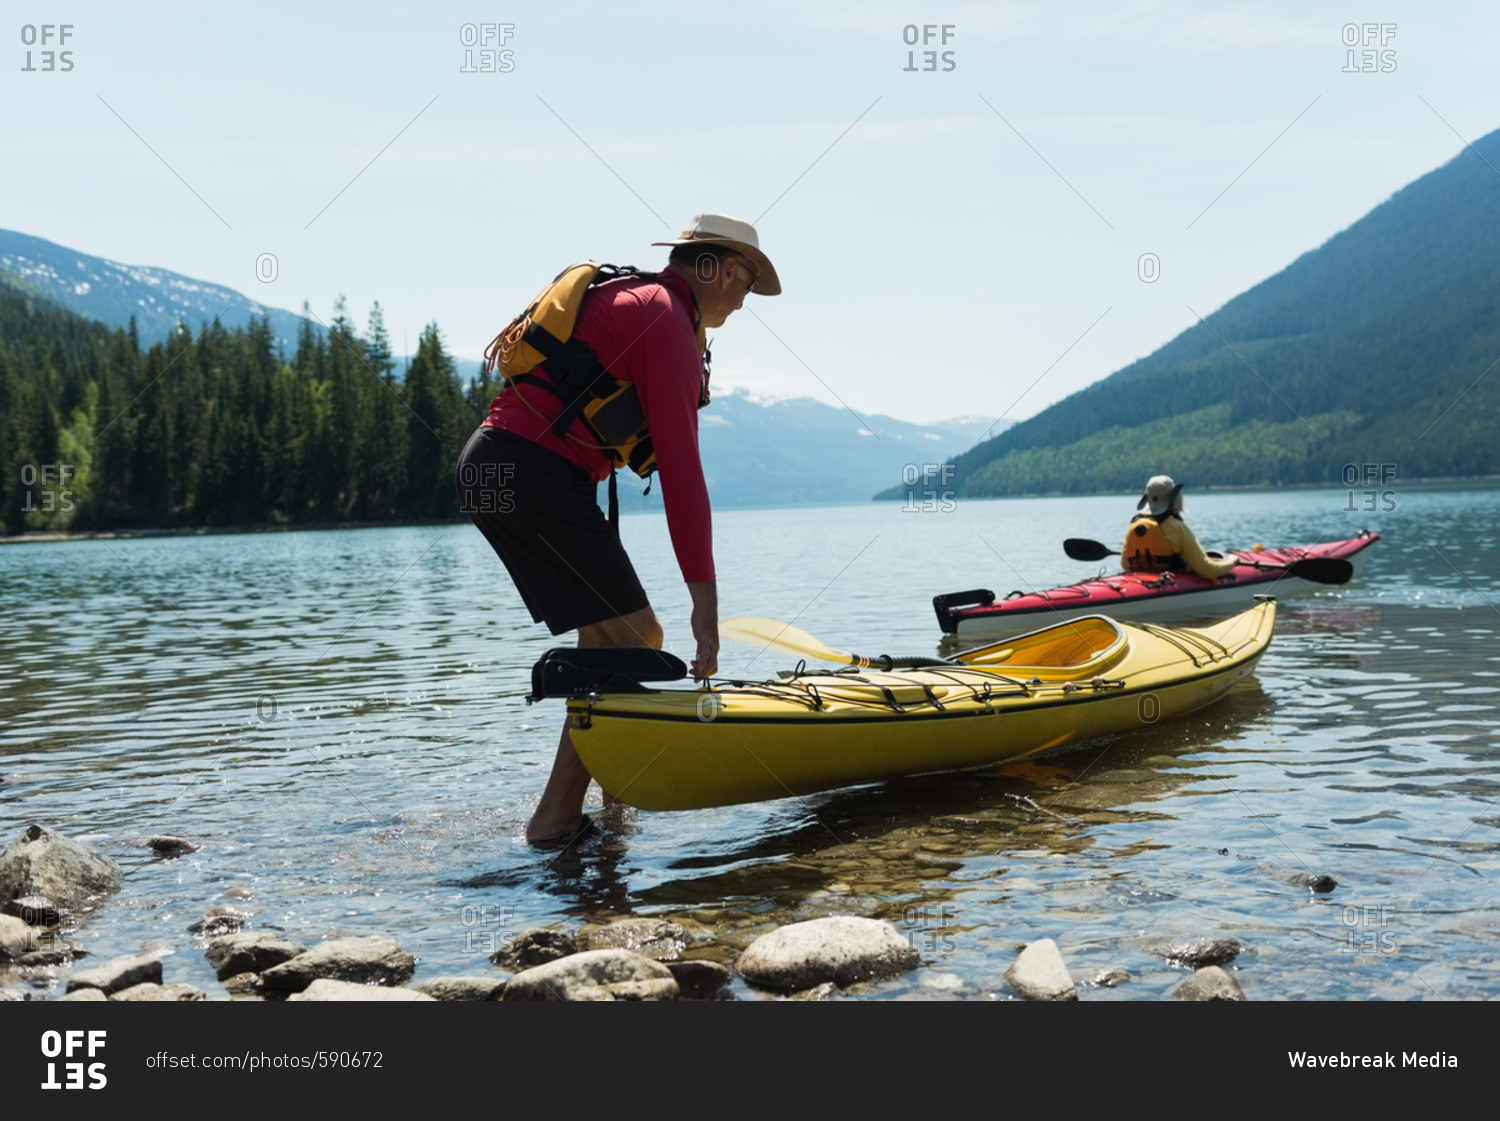 Man holding kayak while woman kayaking in lake against sky during sunny day